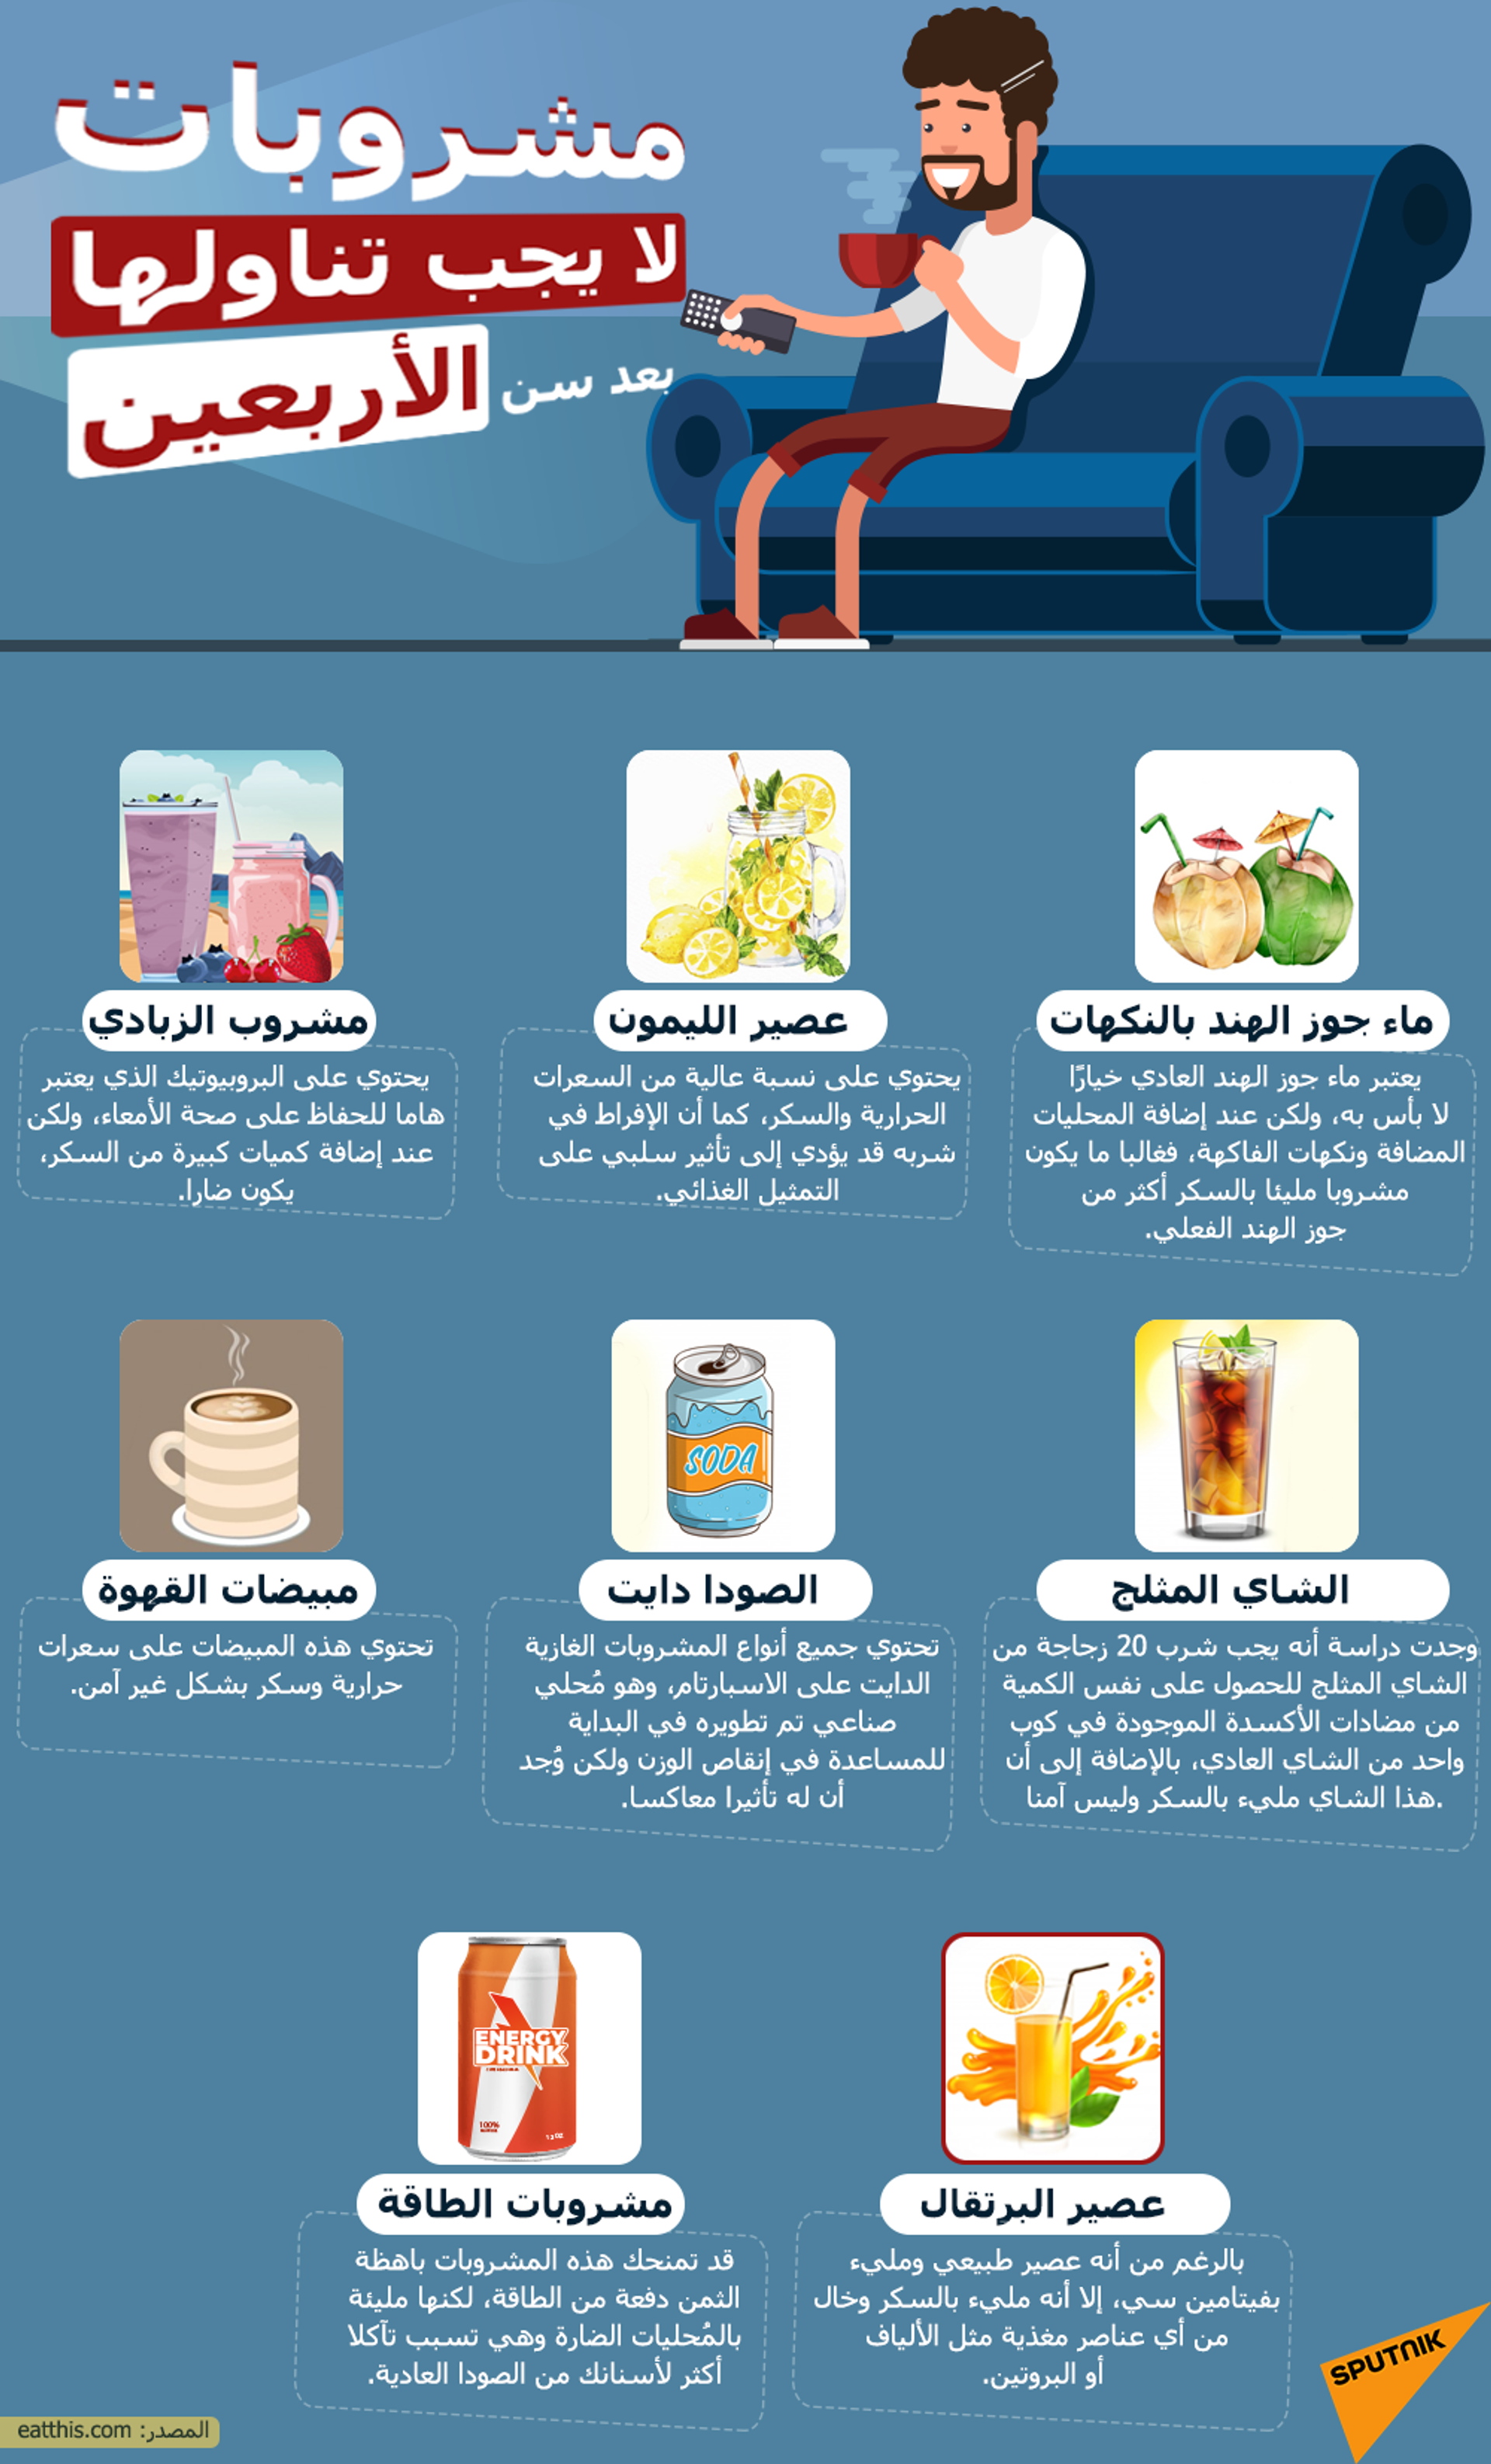 7 فوائد لشرب كوب شاي يوميا - سبوتنيك عربي, 1920, 22.05.2021